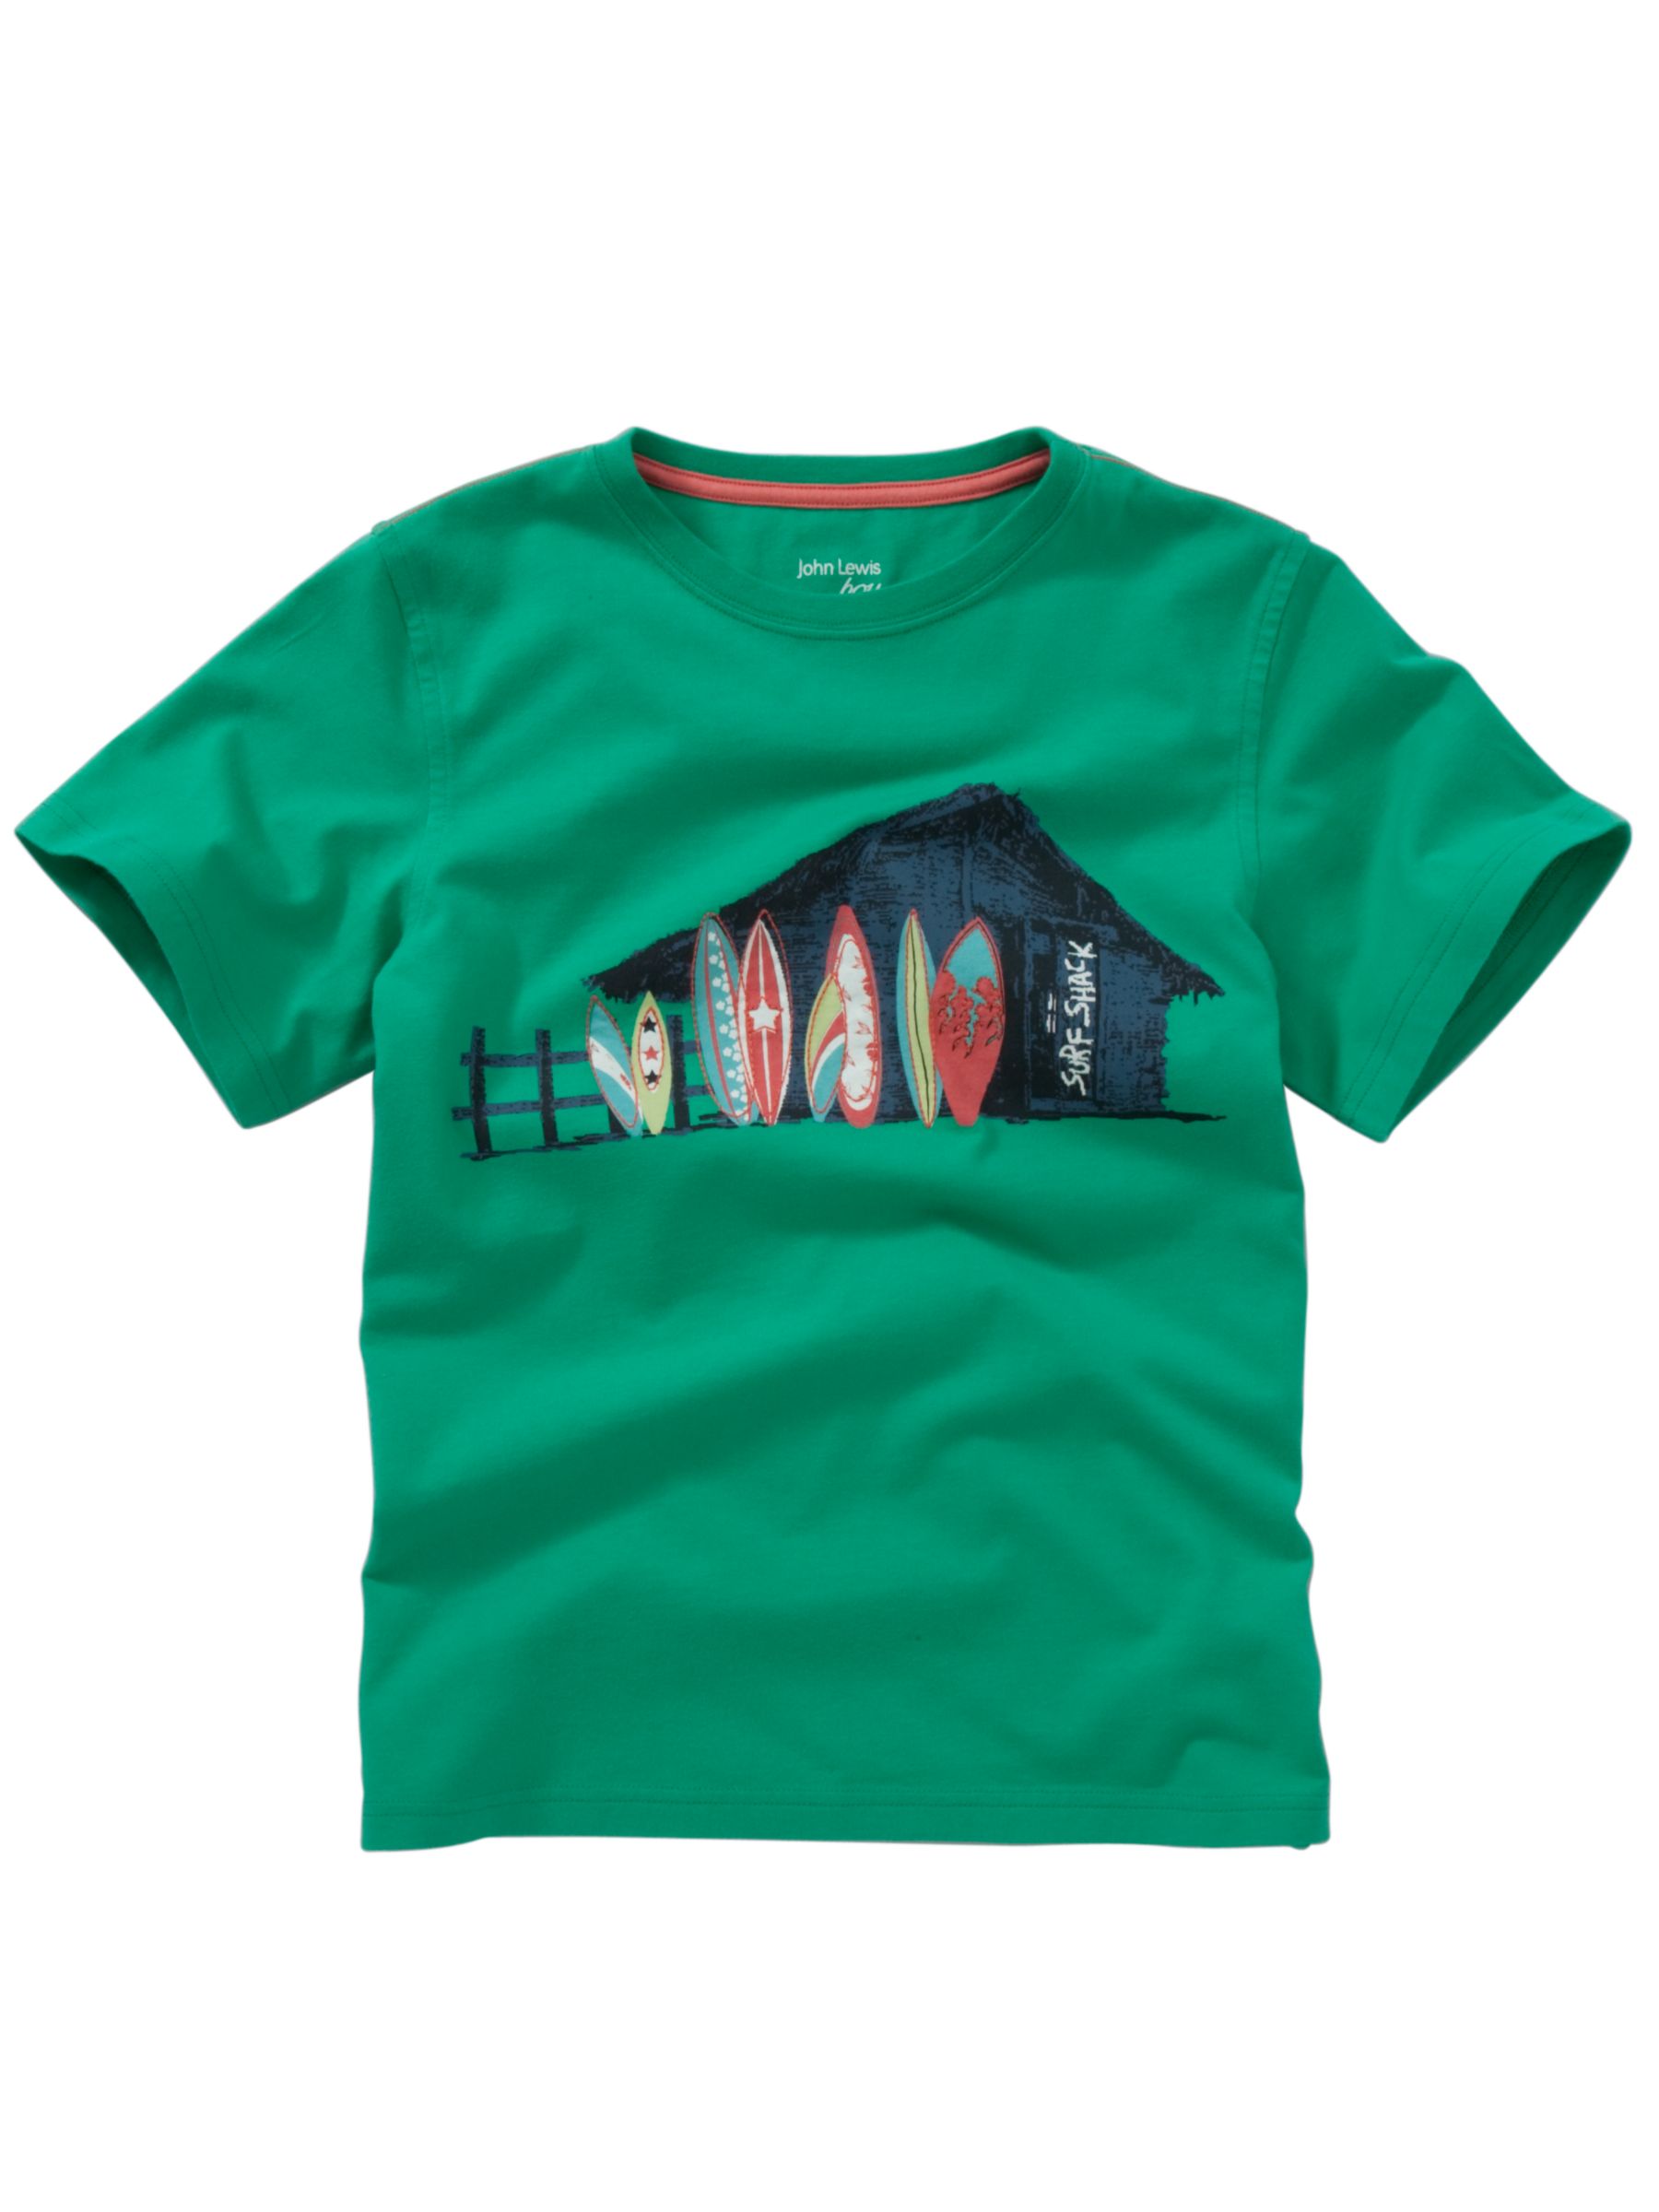 Surfboard Graphic T-Shirt, Green